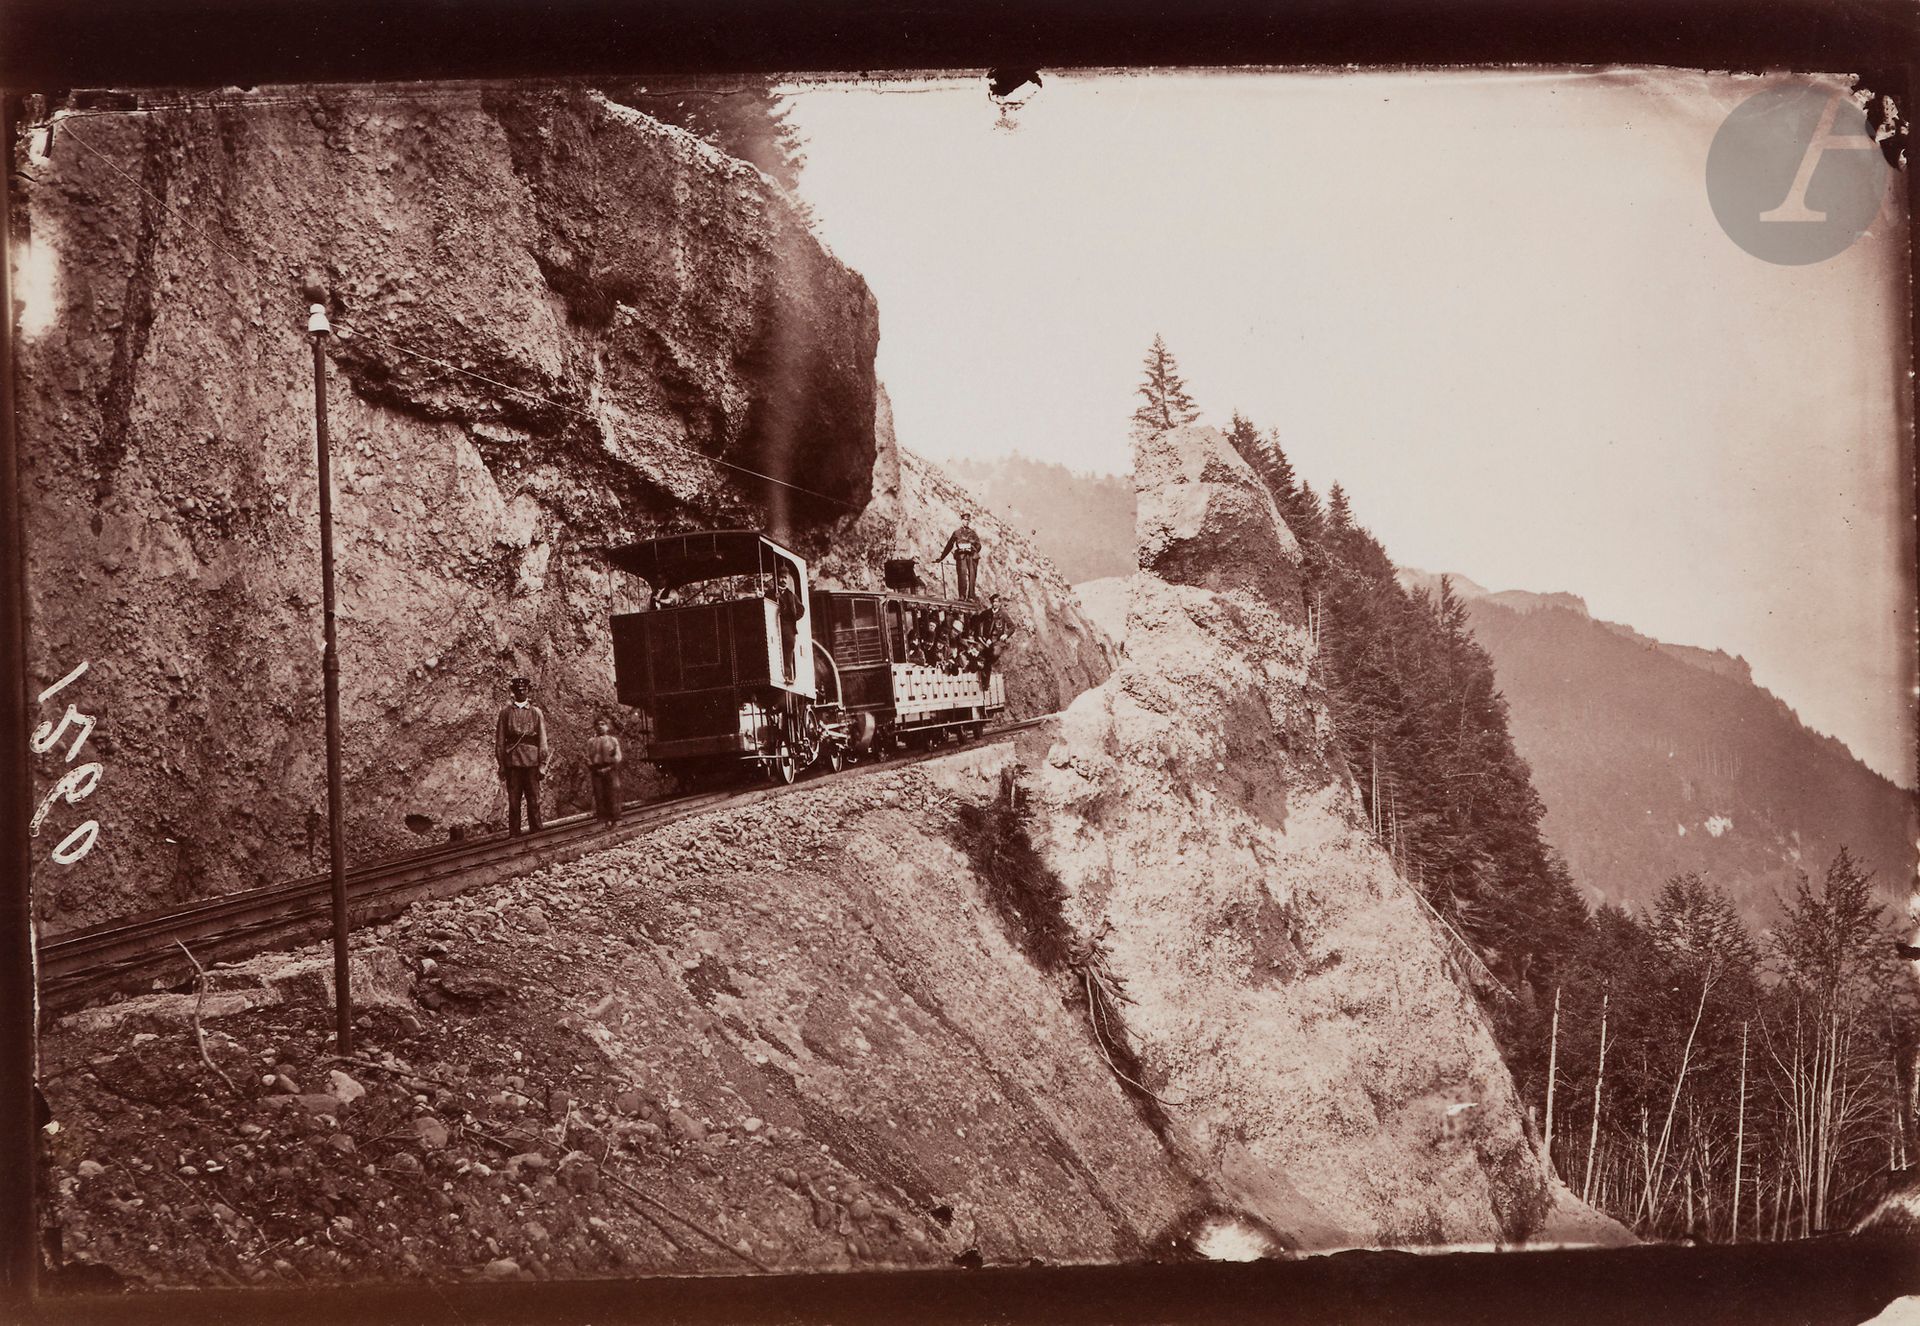 Null Adolphe Braun House
Chemins de fer des Alpes, c. 1866-1890.
The climb after&hellip;